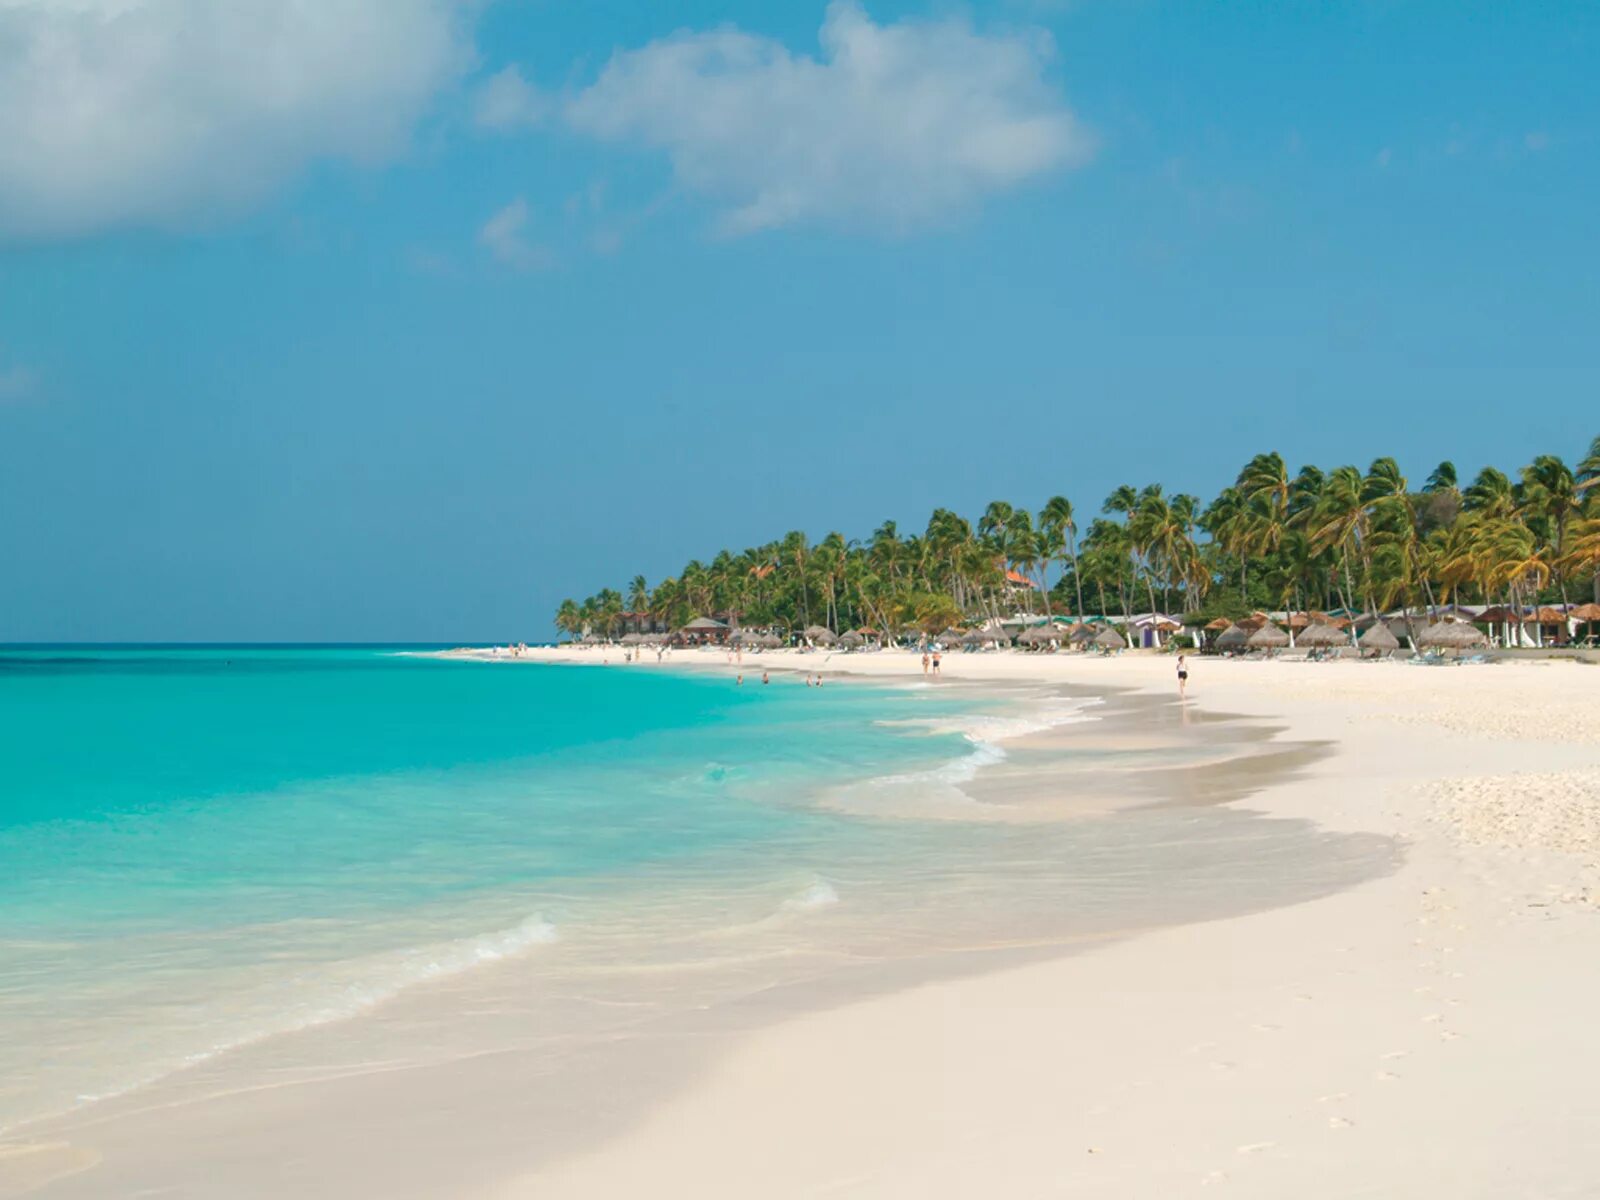 Аруба Карибские острова. Карибское море Доминикана. Аруба пляжи. Аруба Ораньестад. Доминиканская республика аруба